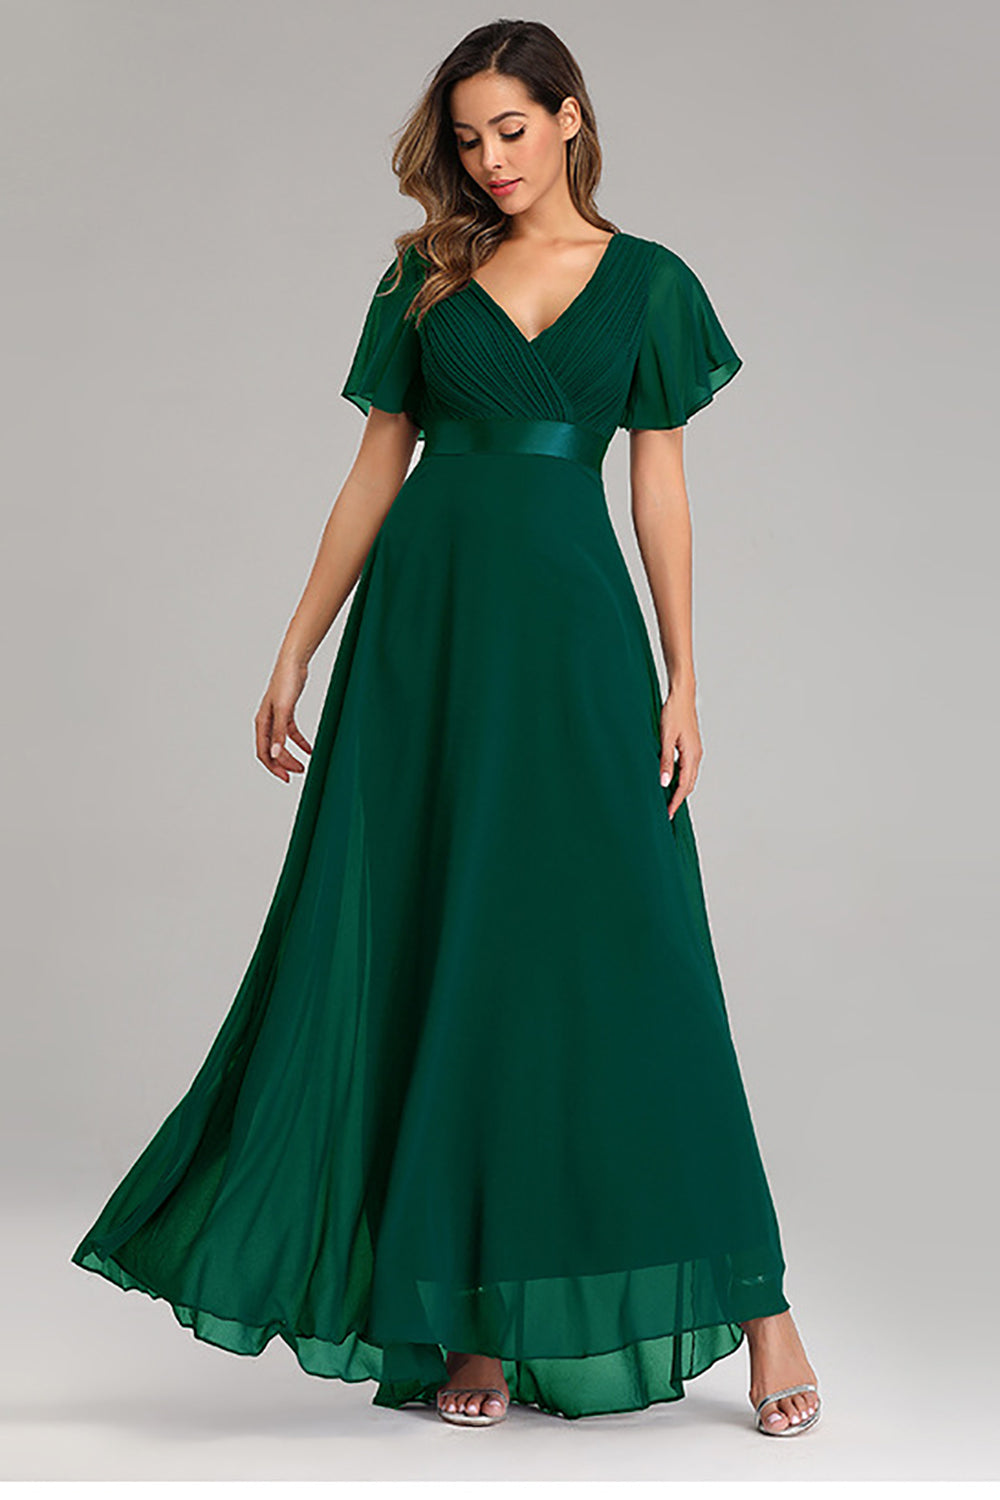 Dark Green Chiffon Long Bridesmaid Dress with Ruffles